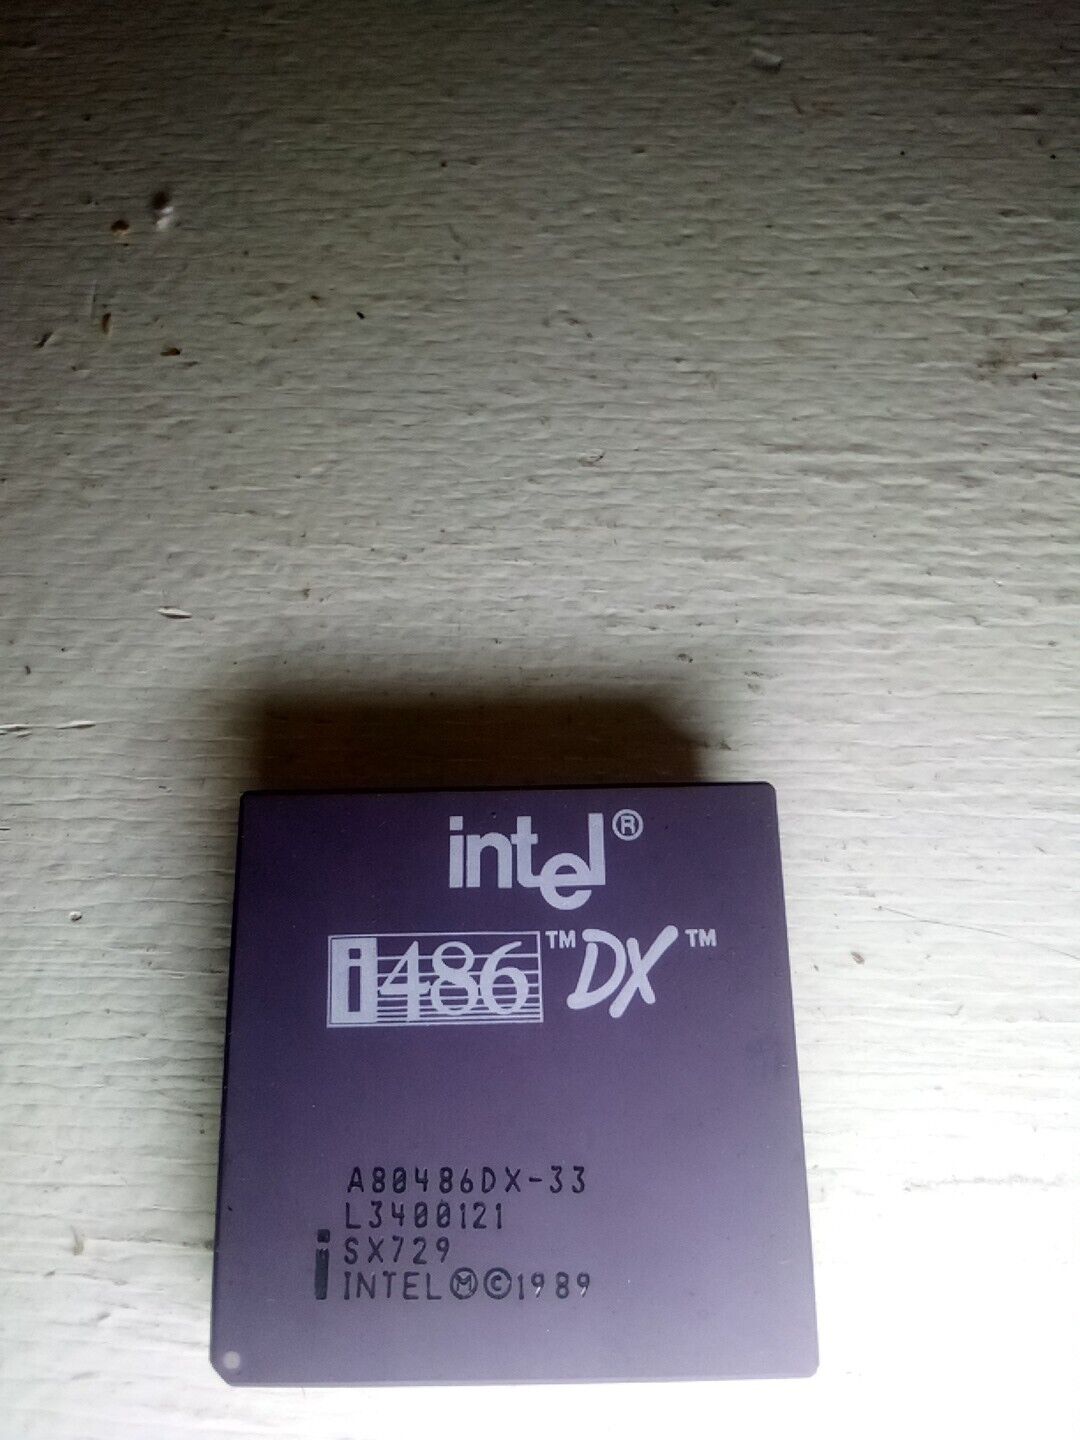 Intel i486 DX A80486DX-33 33MHz CPU Processor